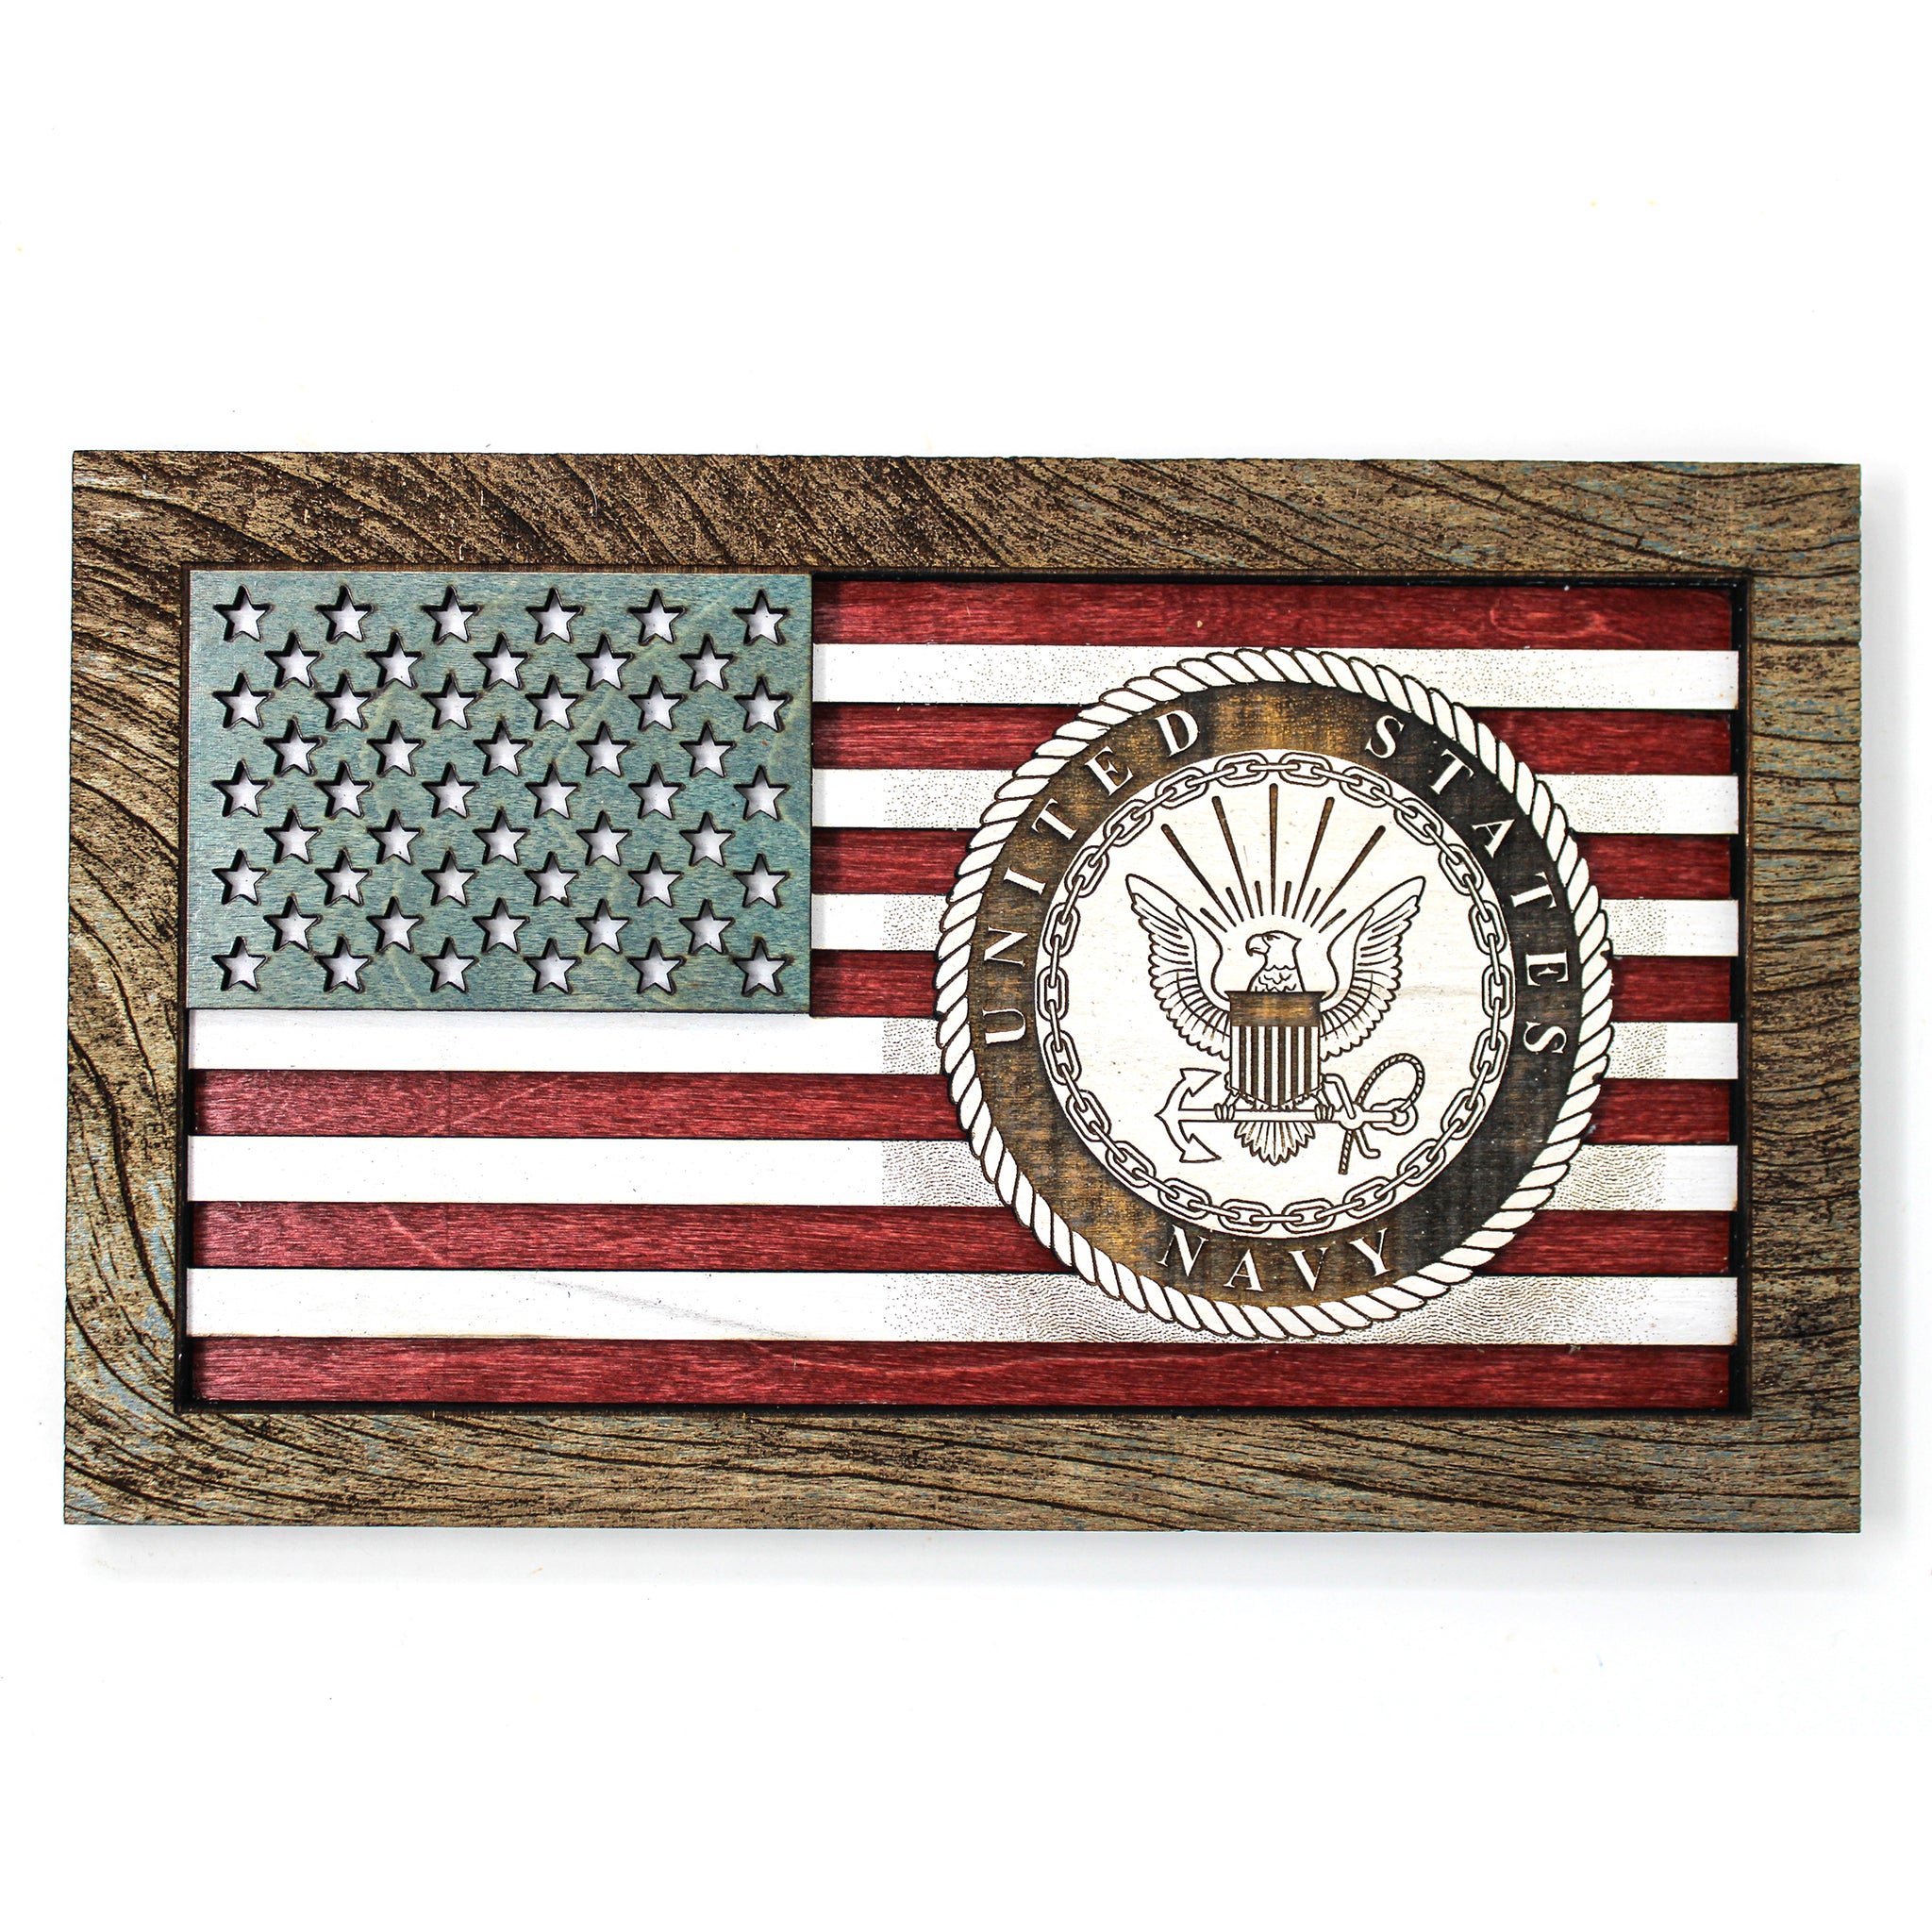 3D Wood Wall Art - Navy Seal American Flag